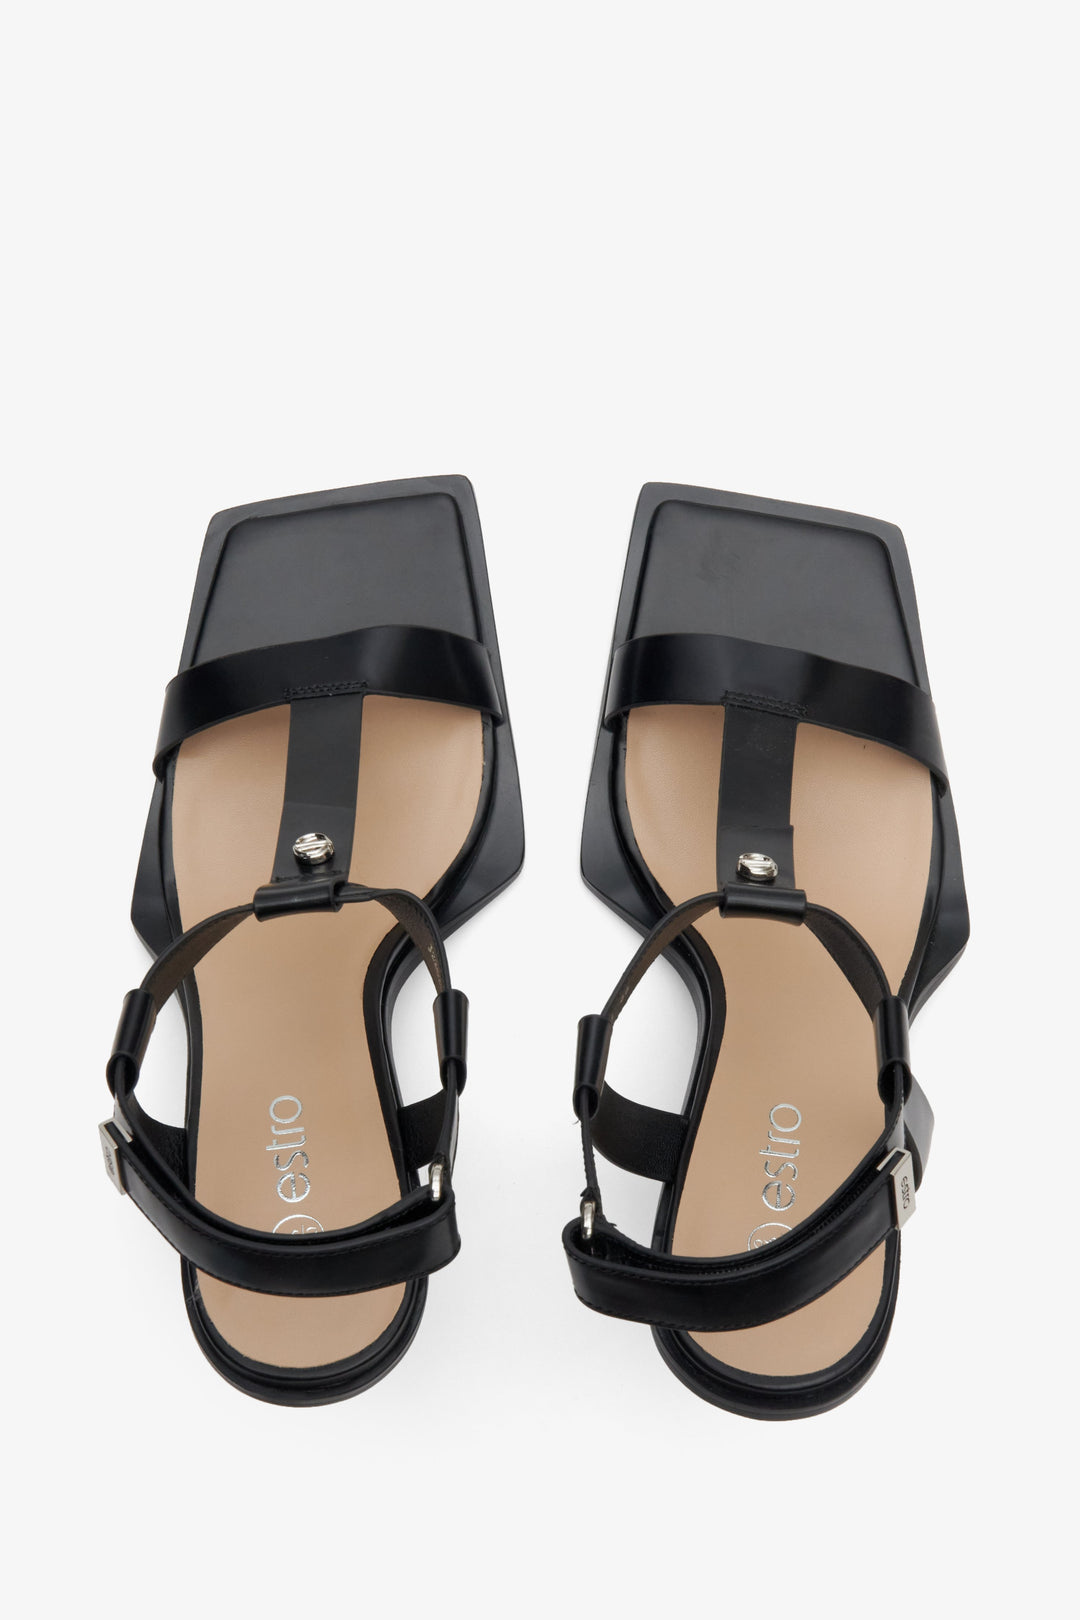 Stylish black t-bar strappy sandals, Estro brand - presentation from above.